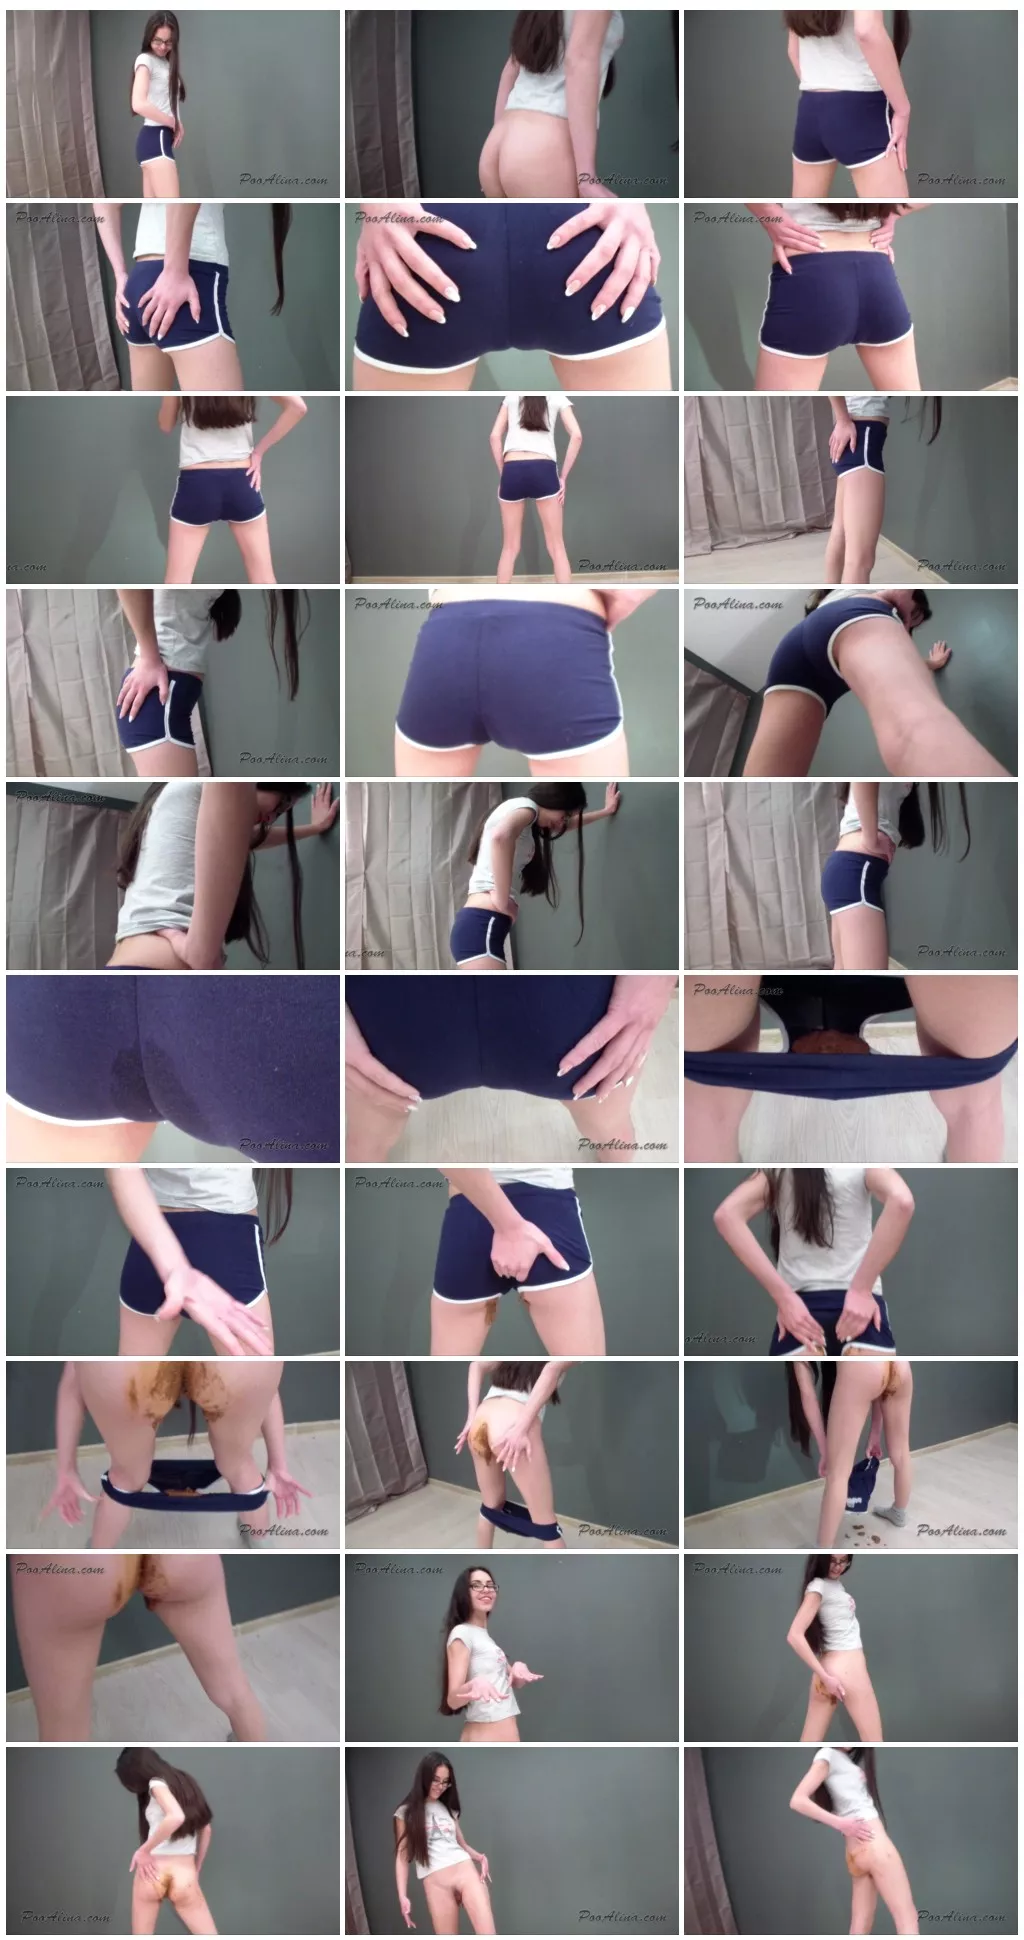 Alina crapped in sports shorts [Scat, shit, defecation, Smearing, Masturbation,  Dirty  shorts]